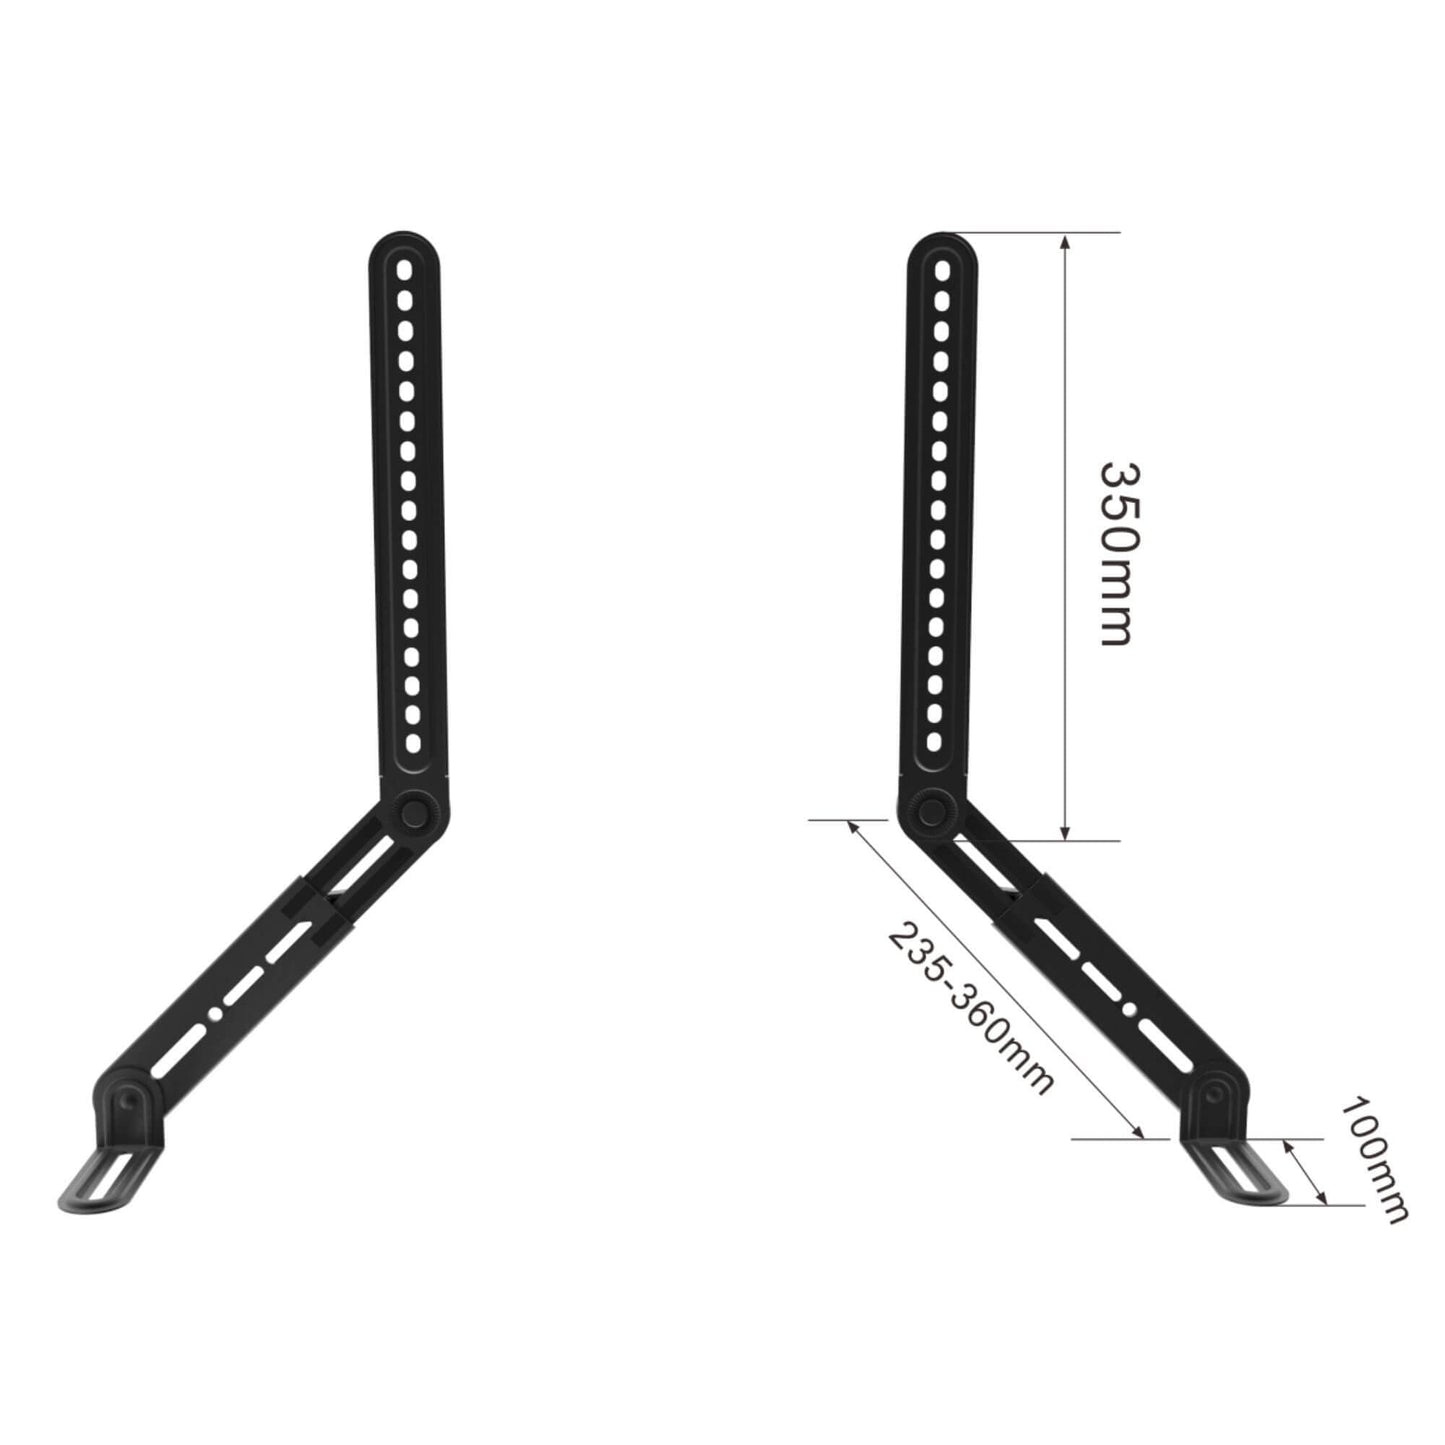 Sound Bar TV Bracket – Adjustable Arm for Mounting Above or Under TV - GADGET WAGON